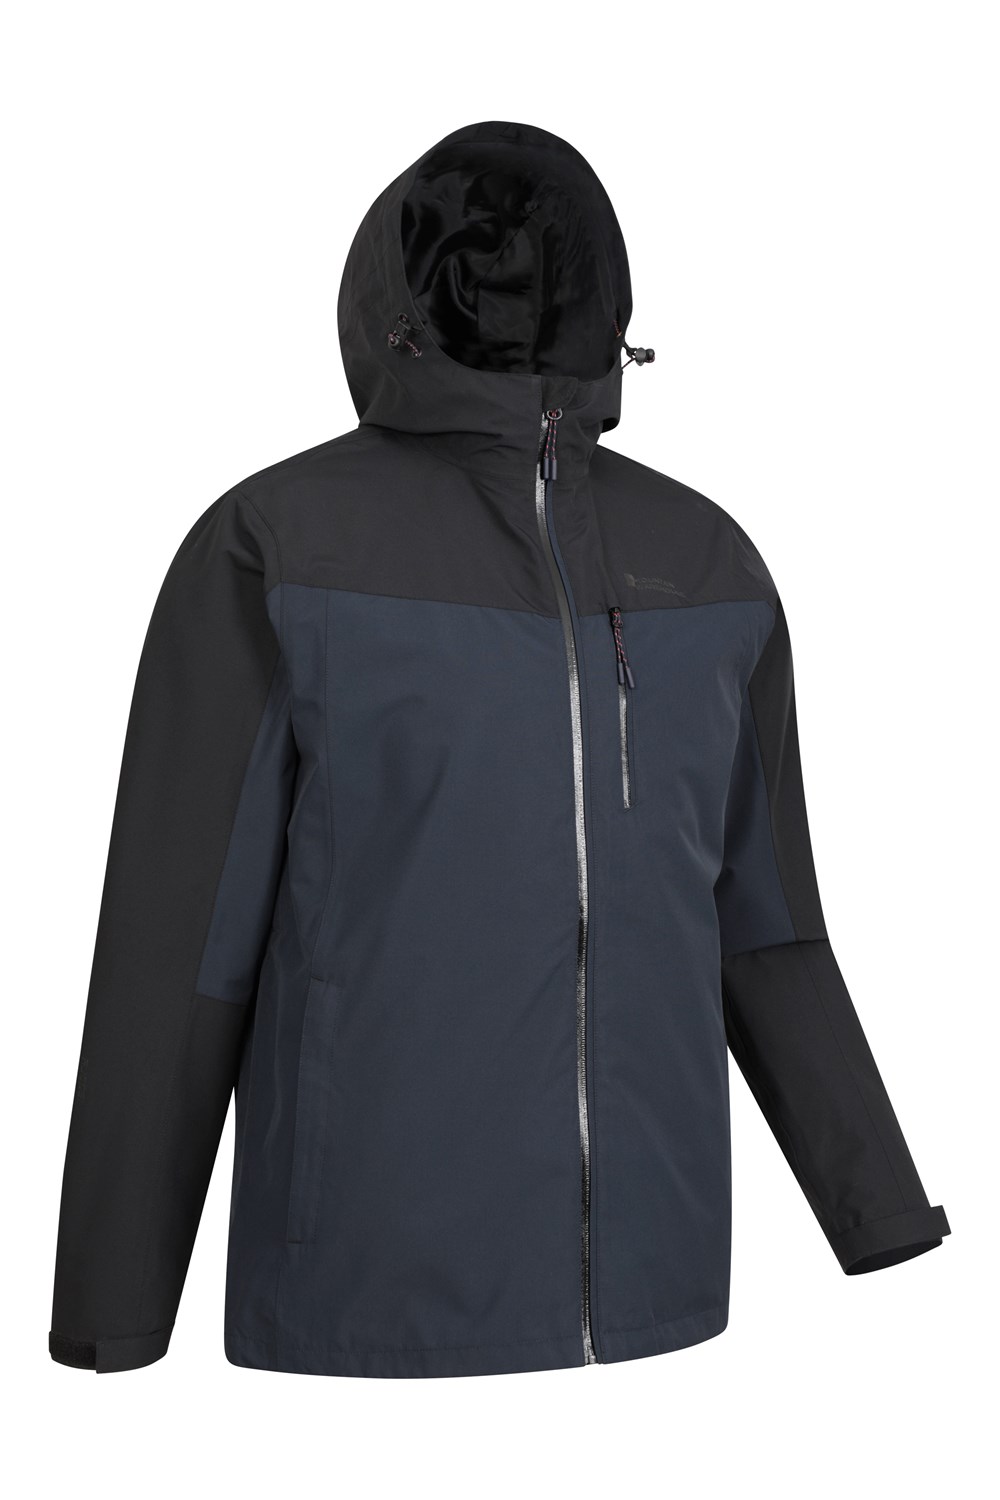 Mountain Warehouse Brisk Extreme Mens Waterproof Jacket Taped Seams ...